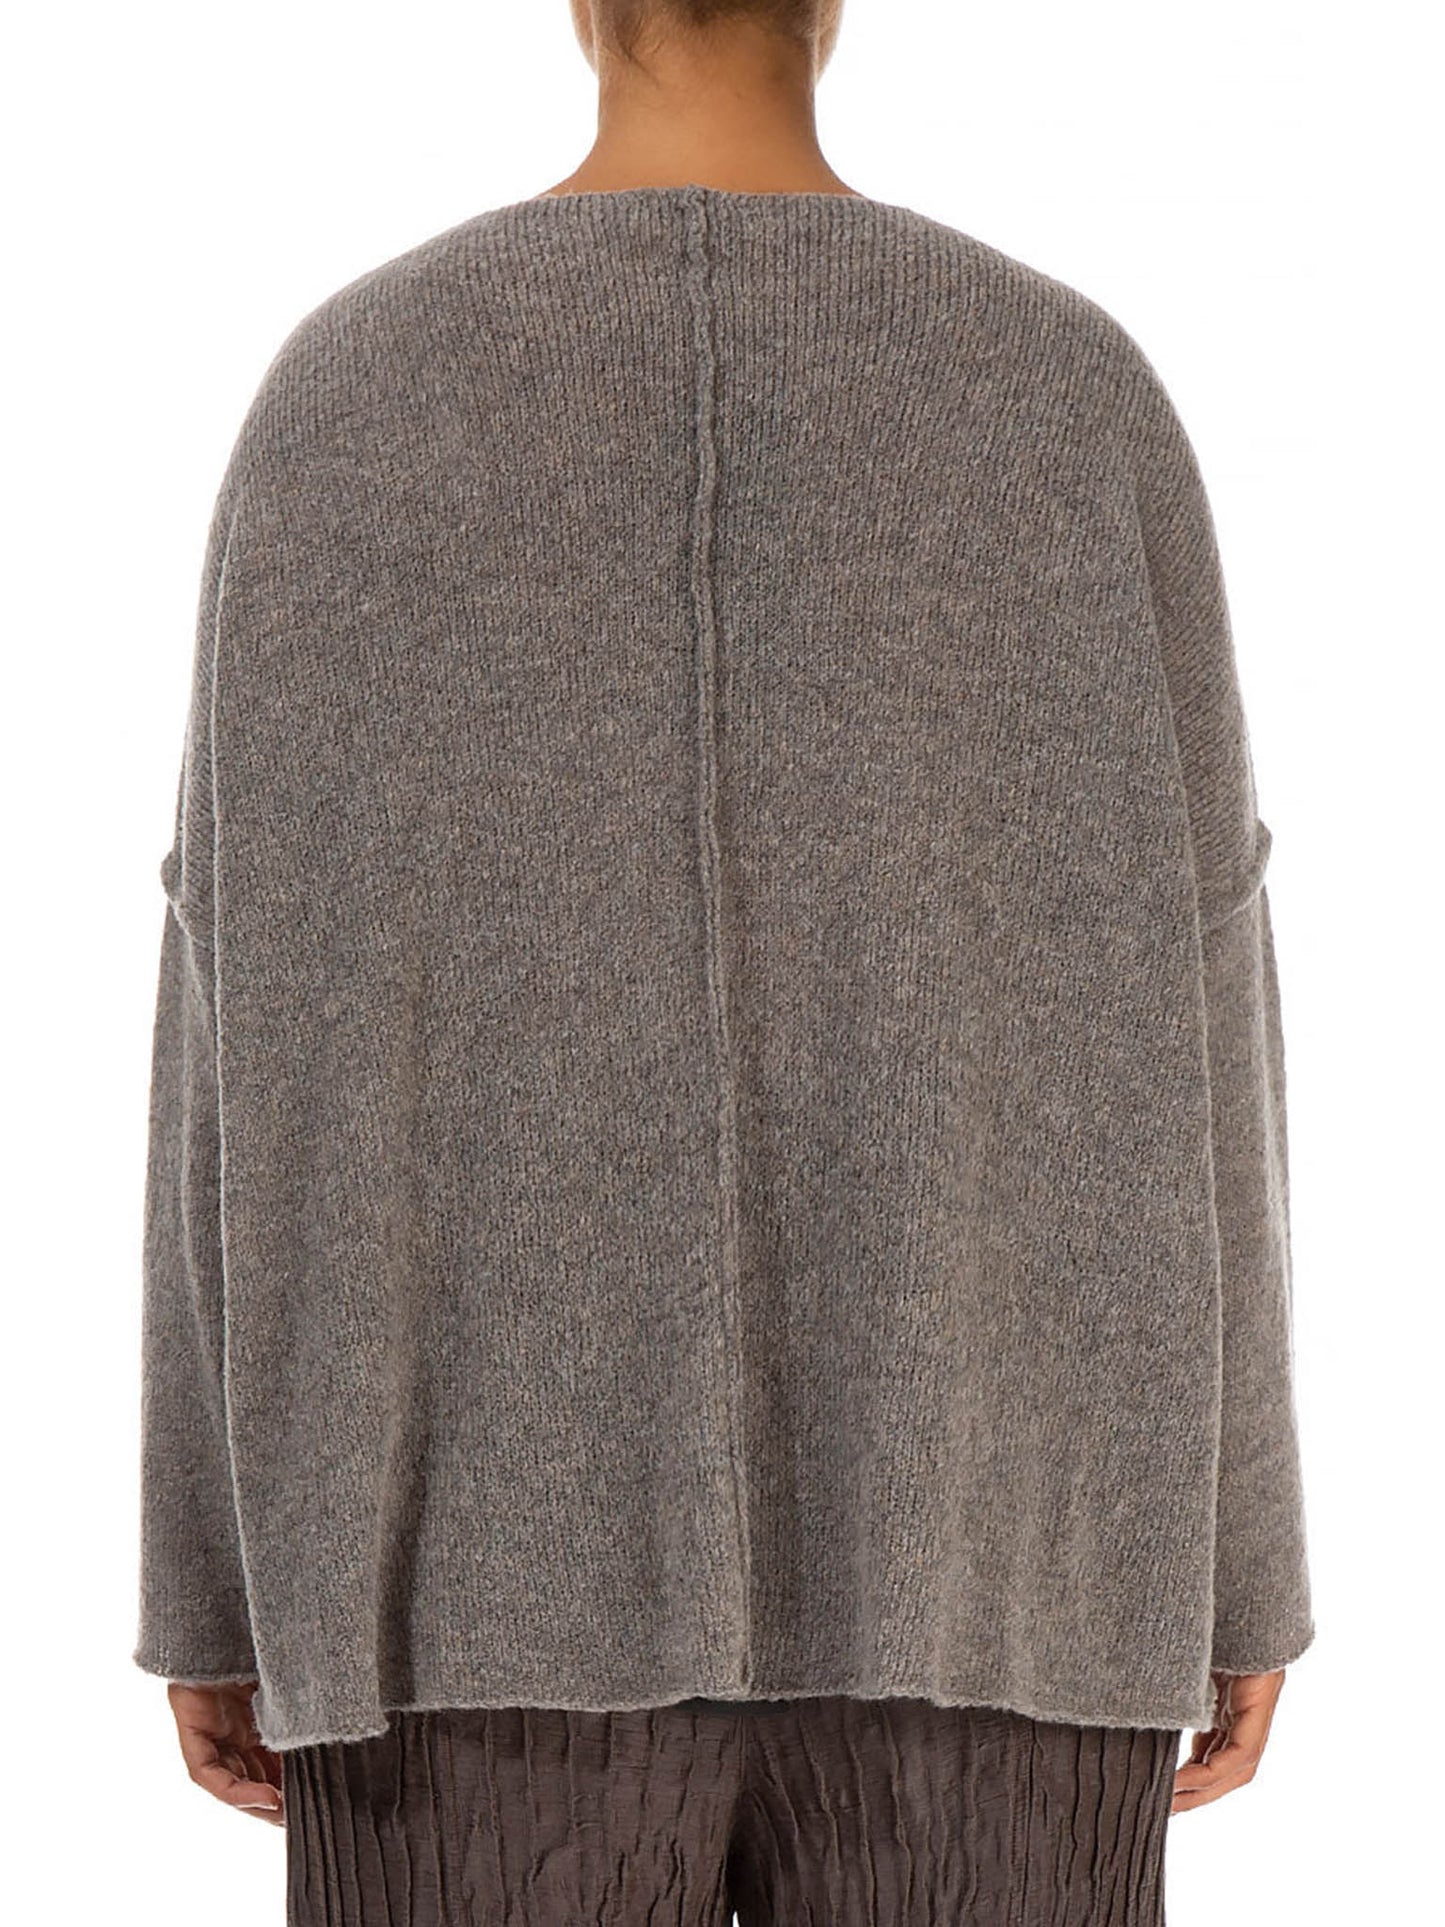 Grizas Exposed Seam Beige Wool Sweater on model back